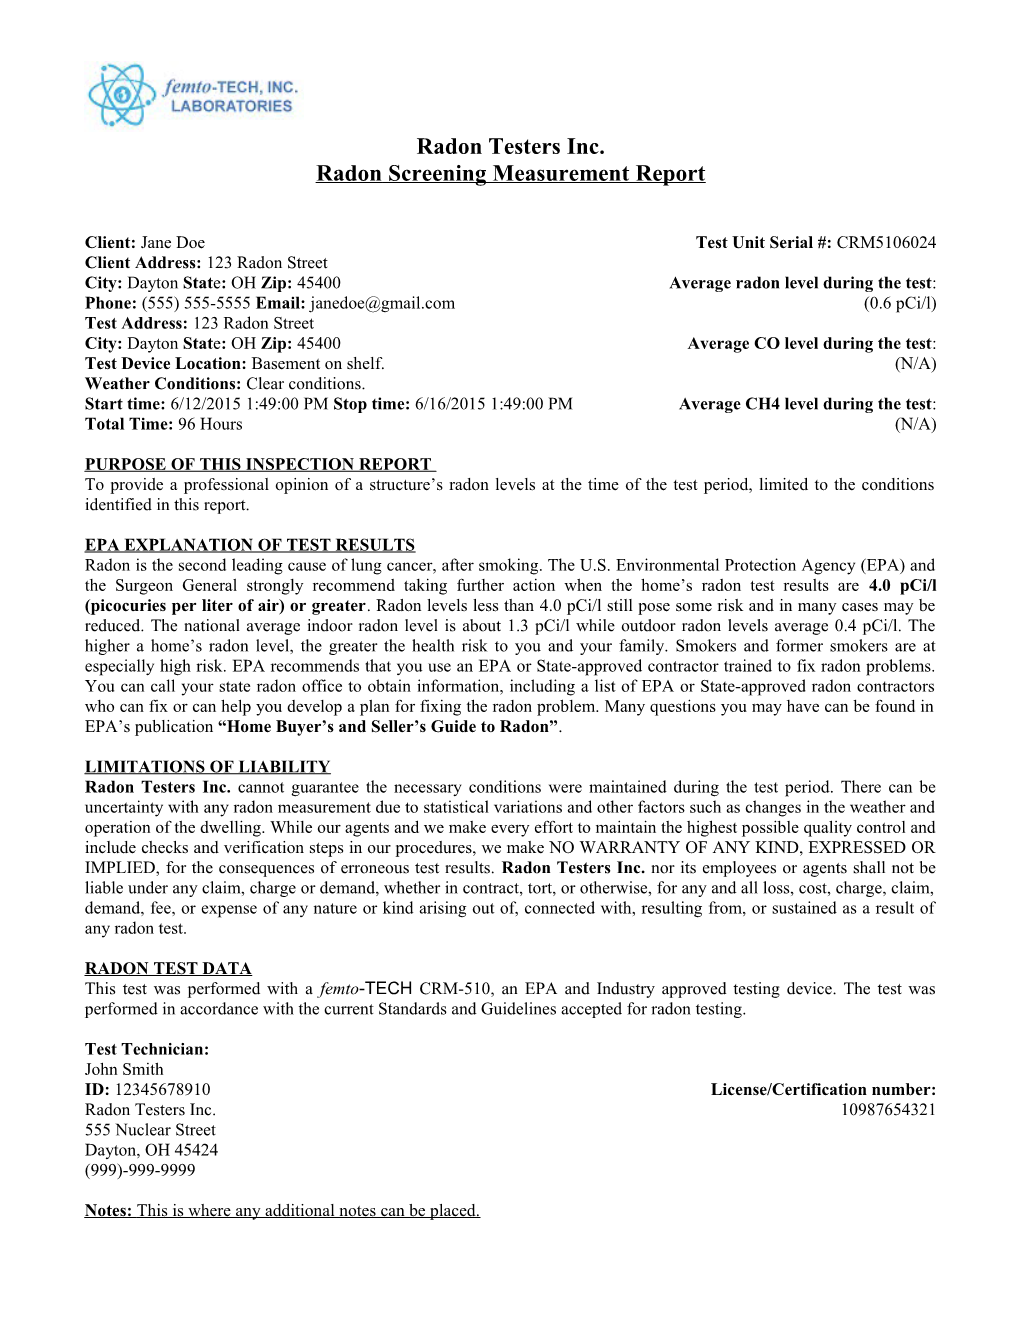 Radon Test Results Report